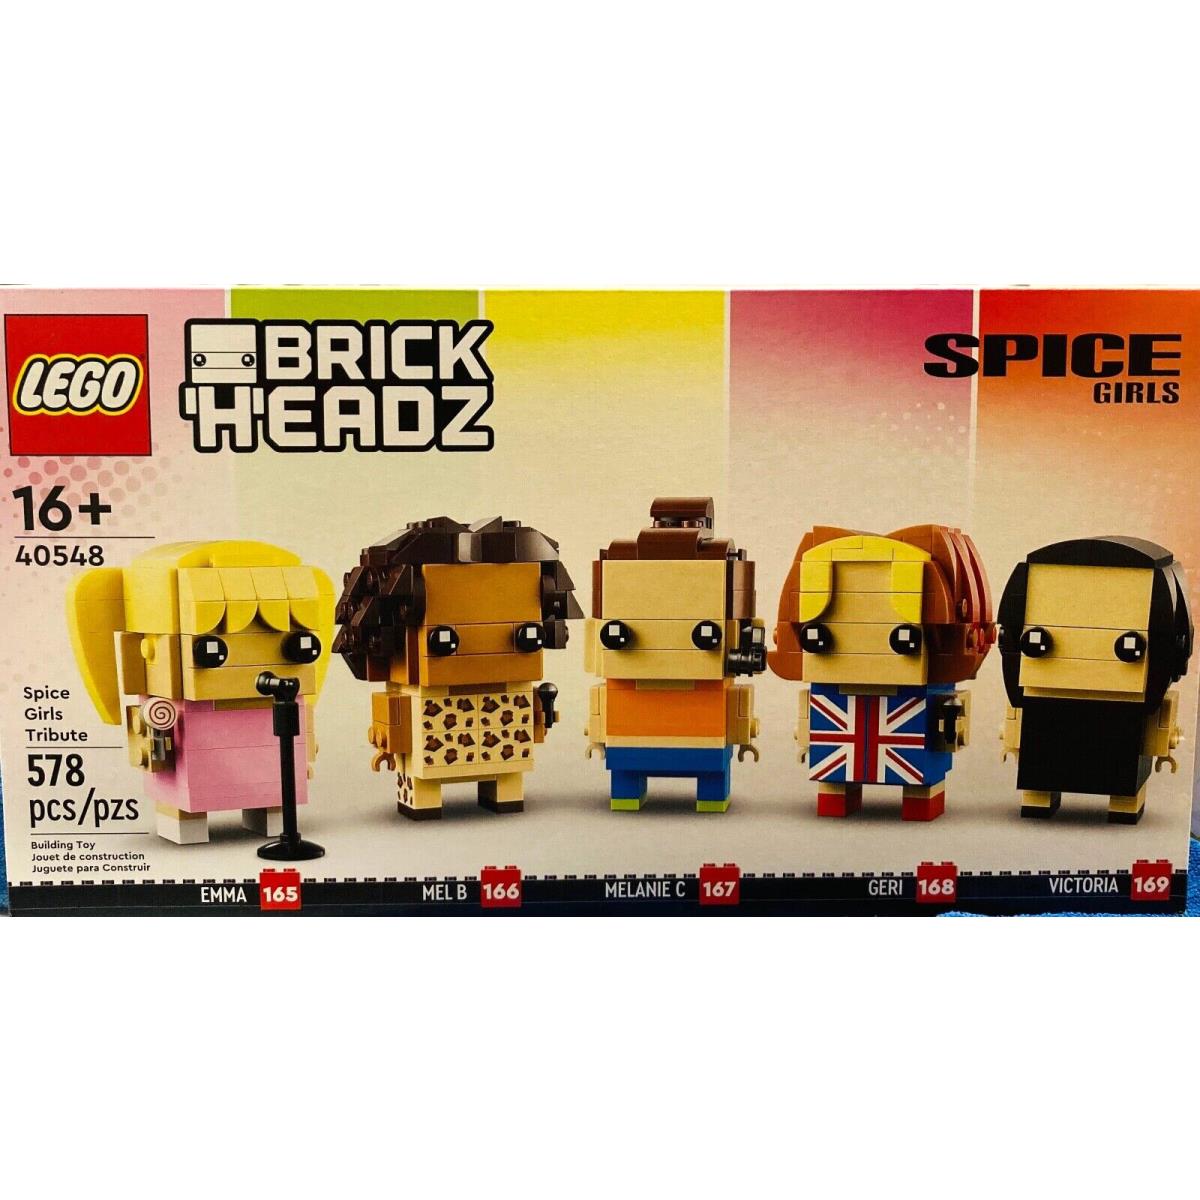 Lego Brickheadz Home to Spice Girls - 578 Pieces Building Kit Toy Set